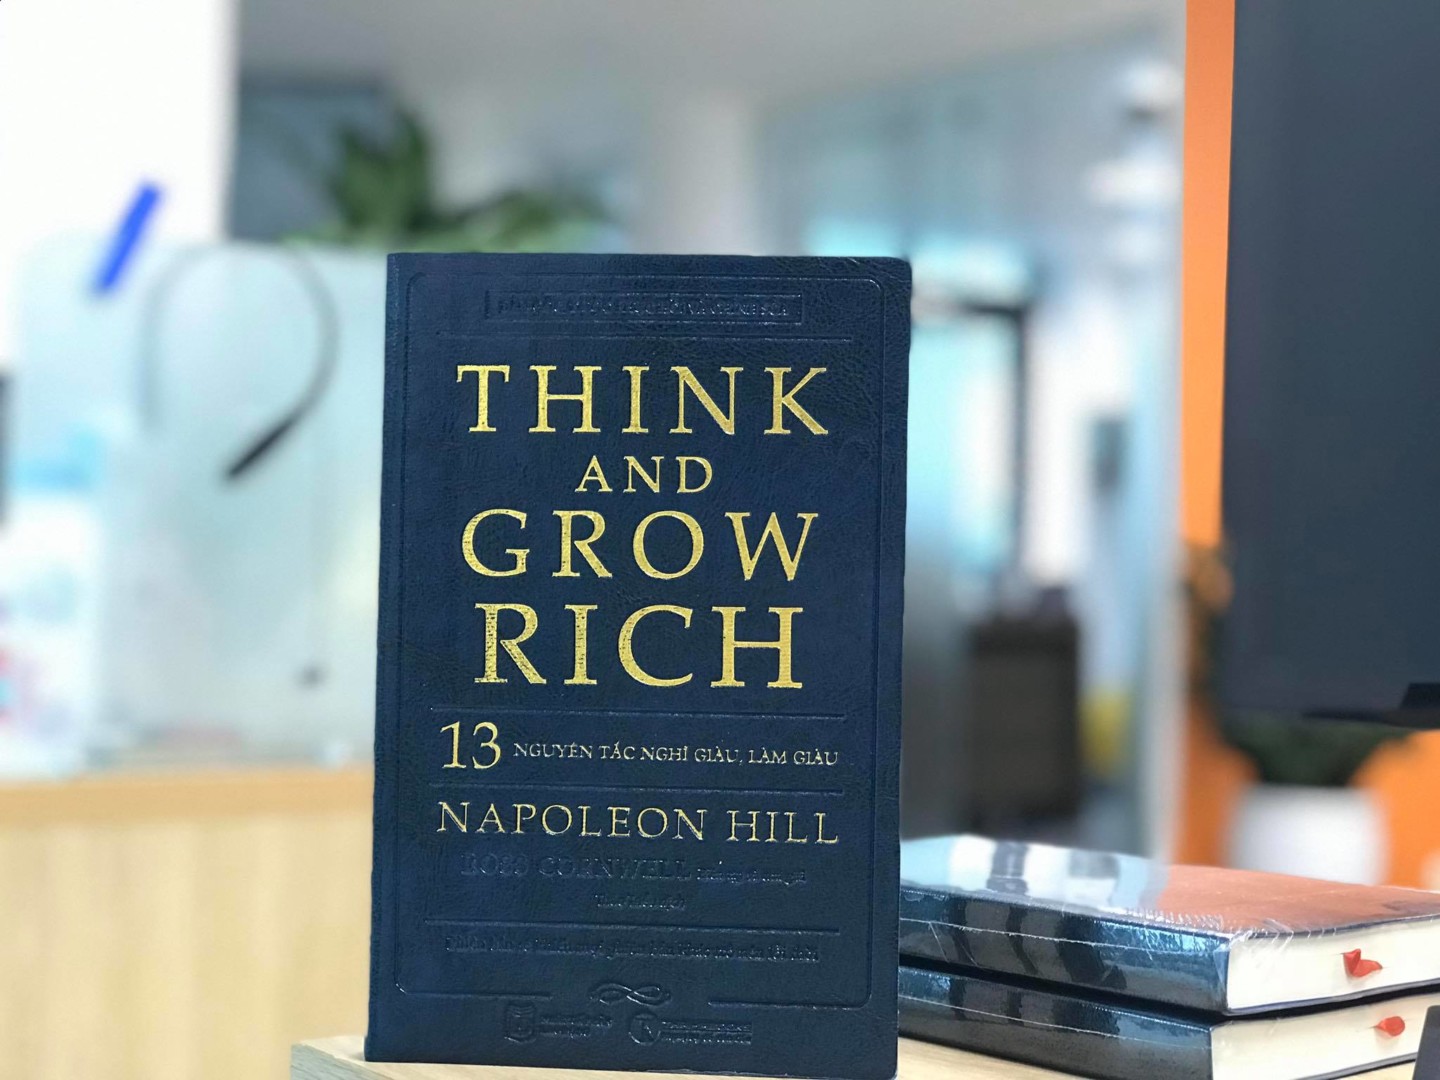 Think and Grow Rich – bản giới hạn